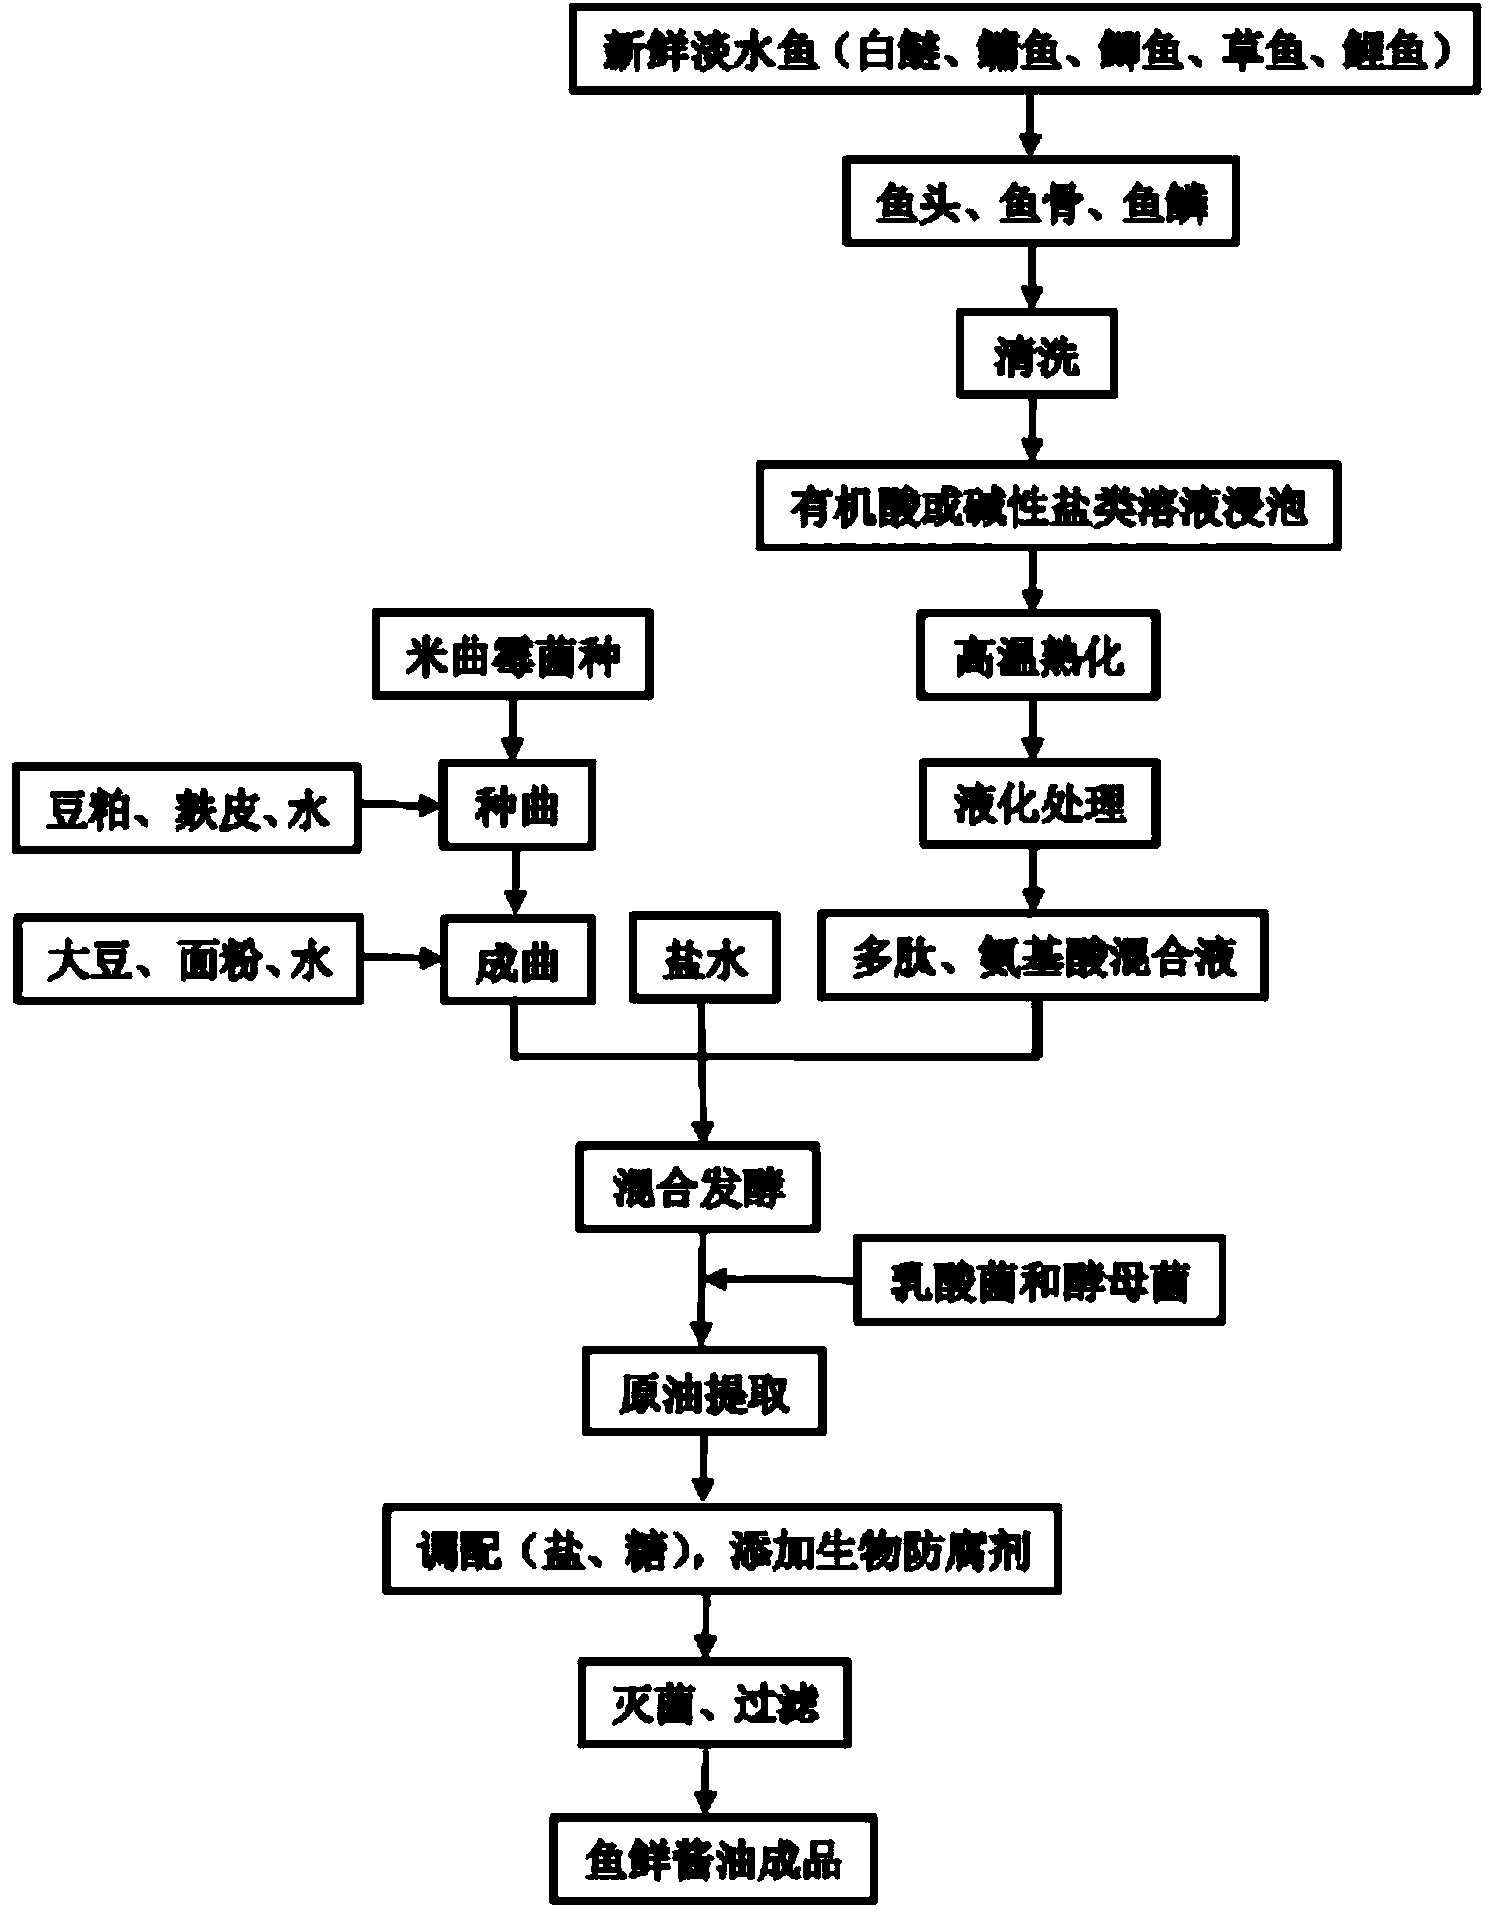 Production method of fresh fish soybean sauce